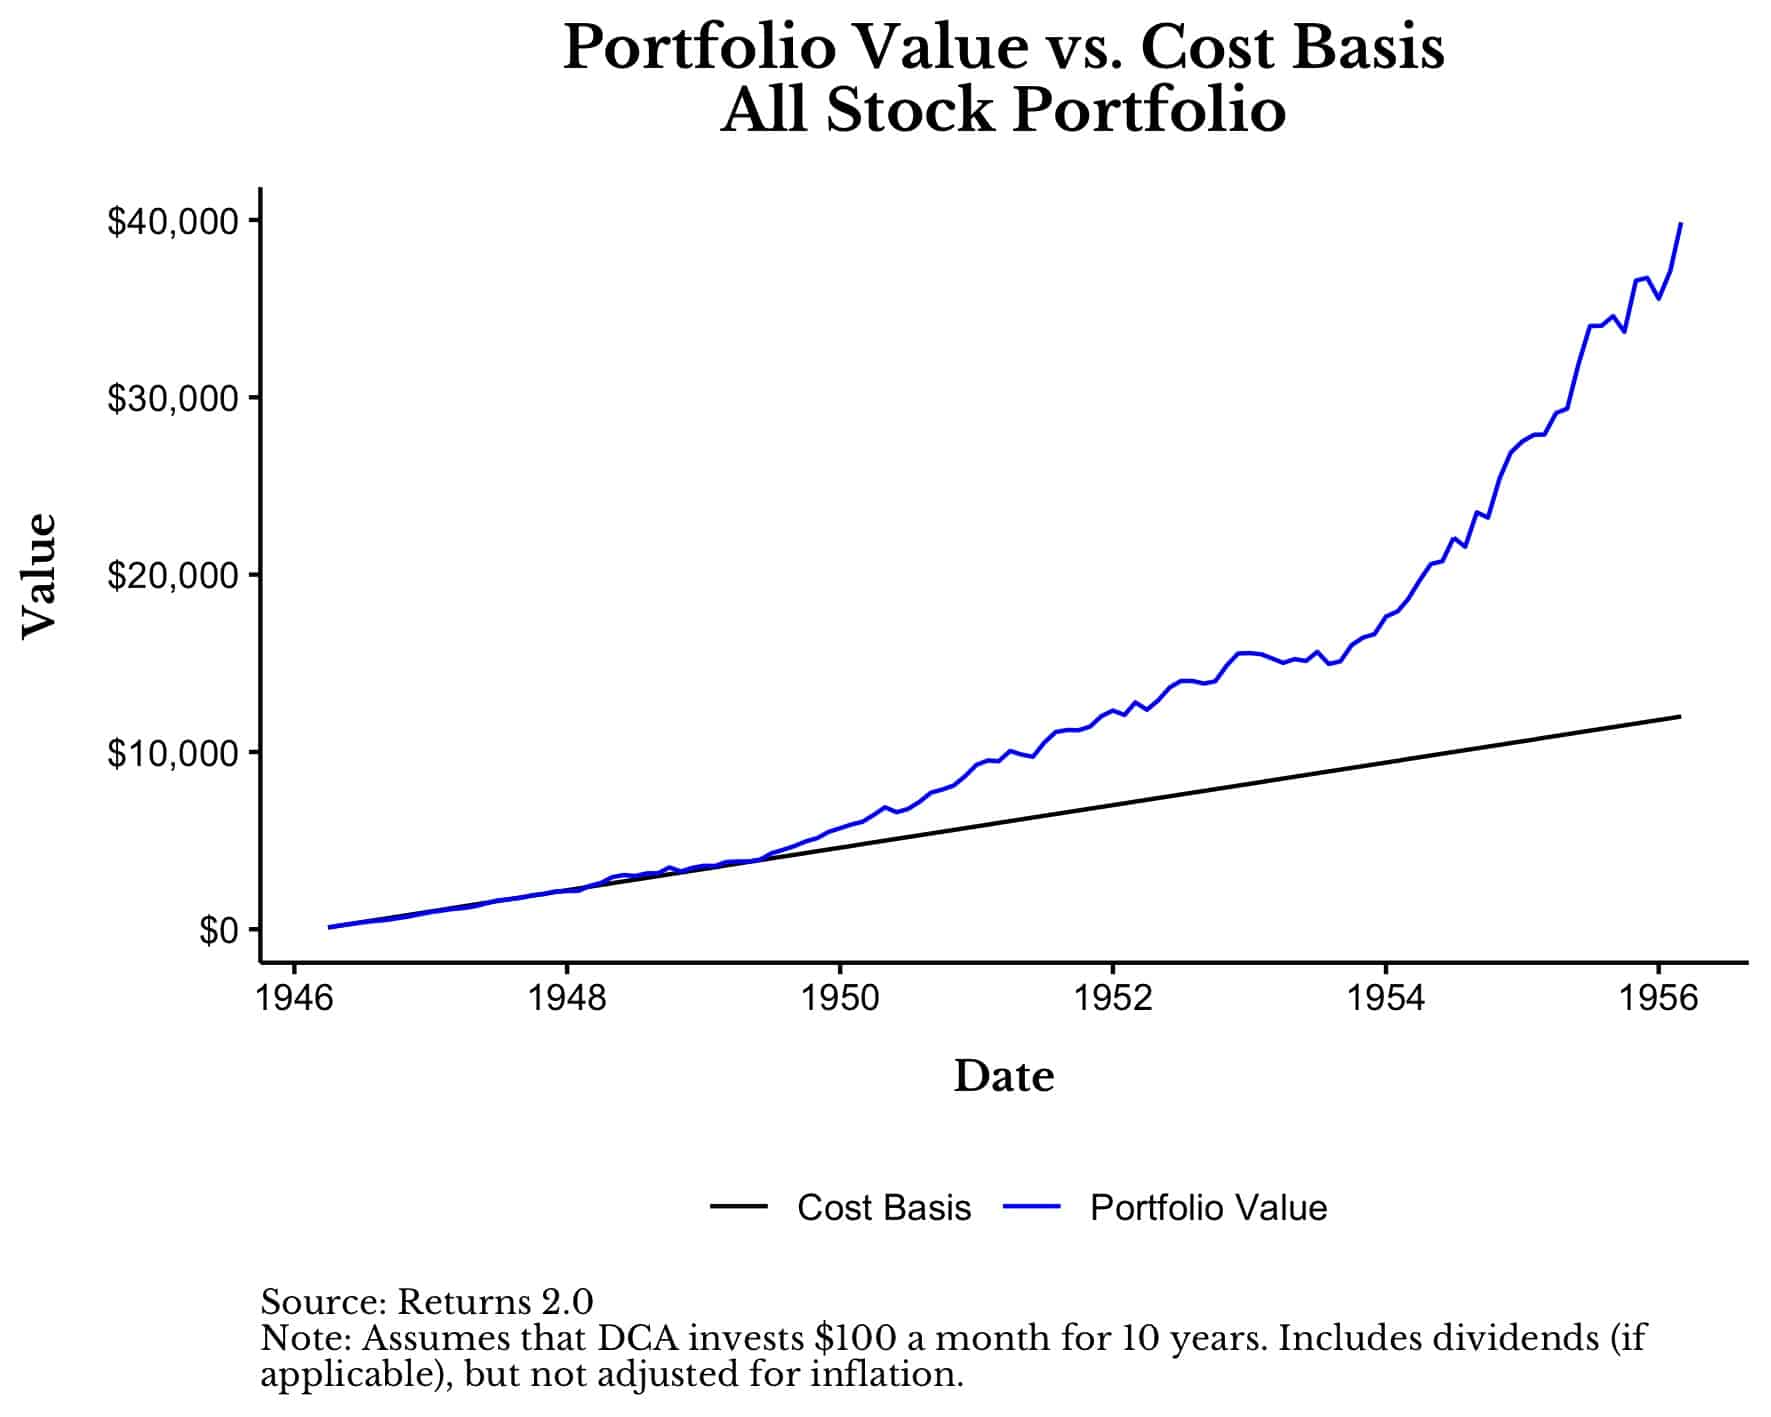 Portfolio value vs cost basis of all stock portfolio, 1946-1956